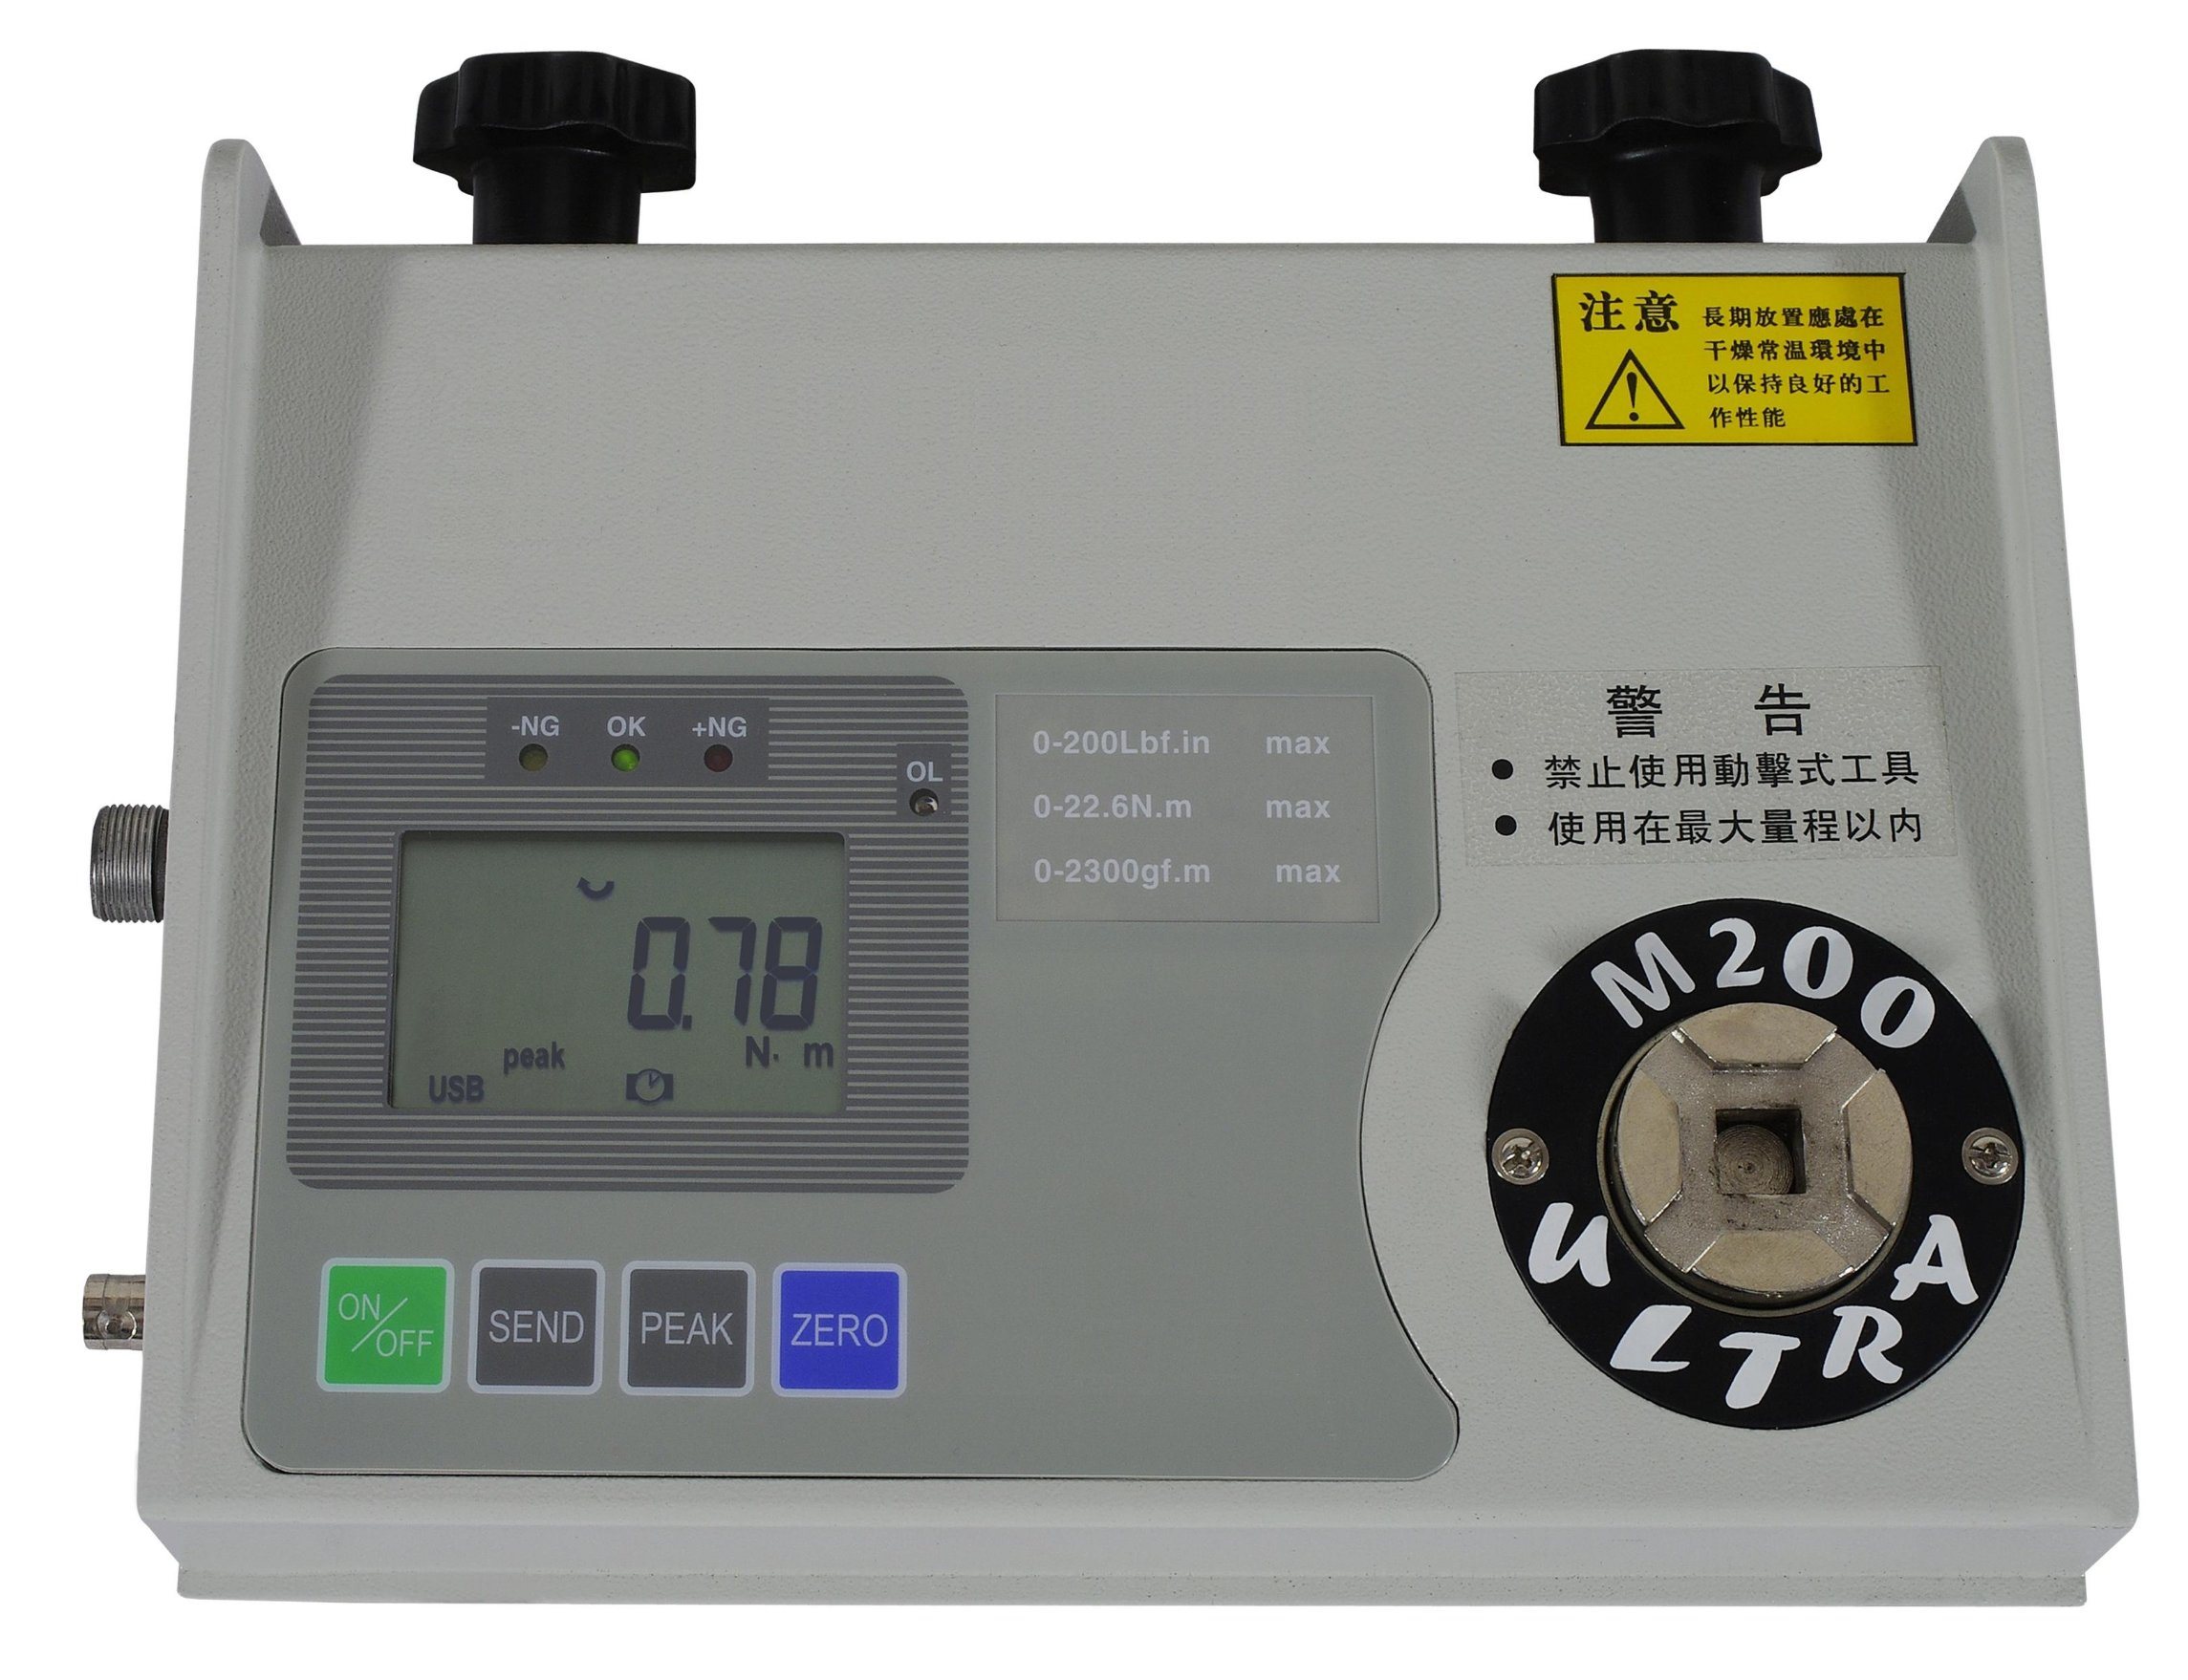 Testing Equipment Digital Torque Meter M-200